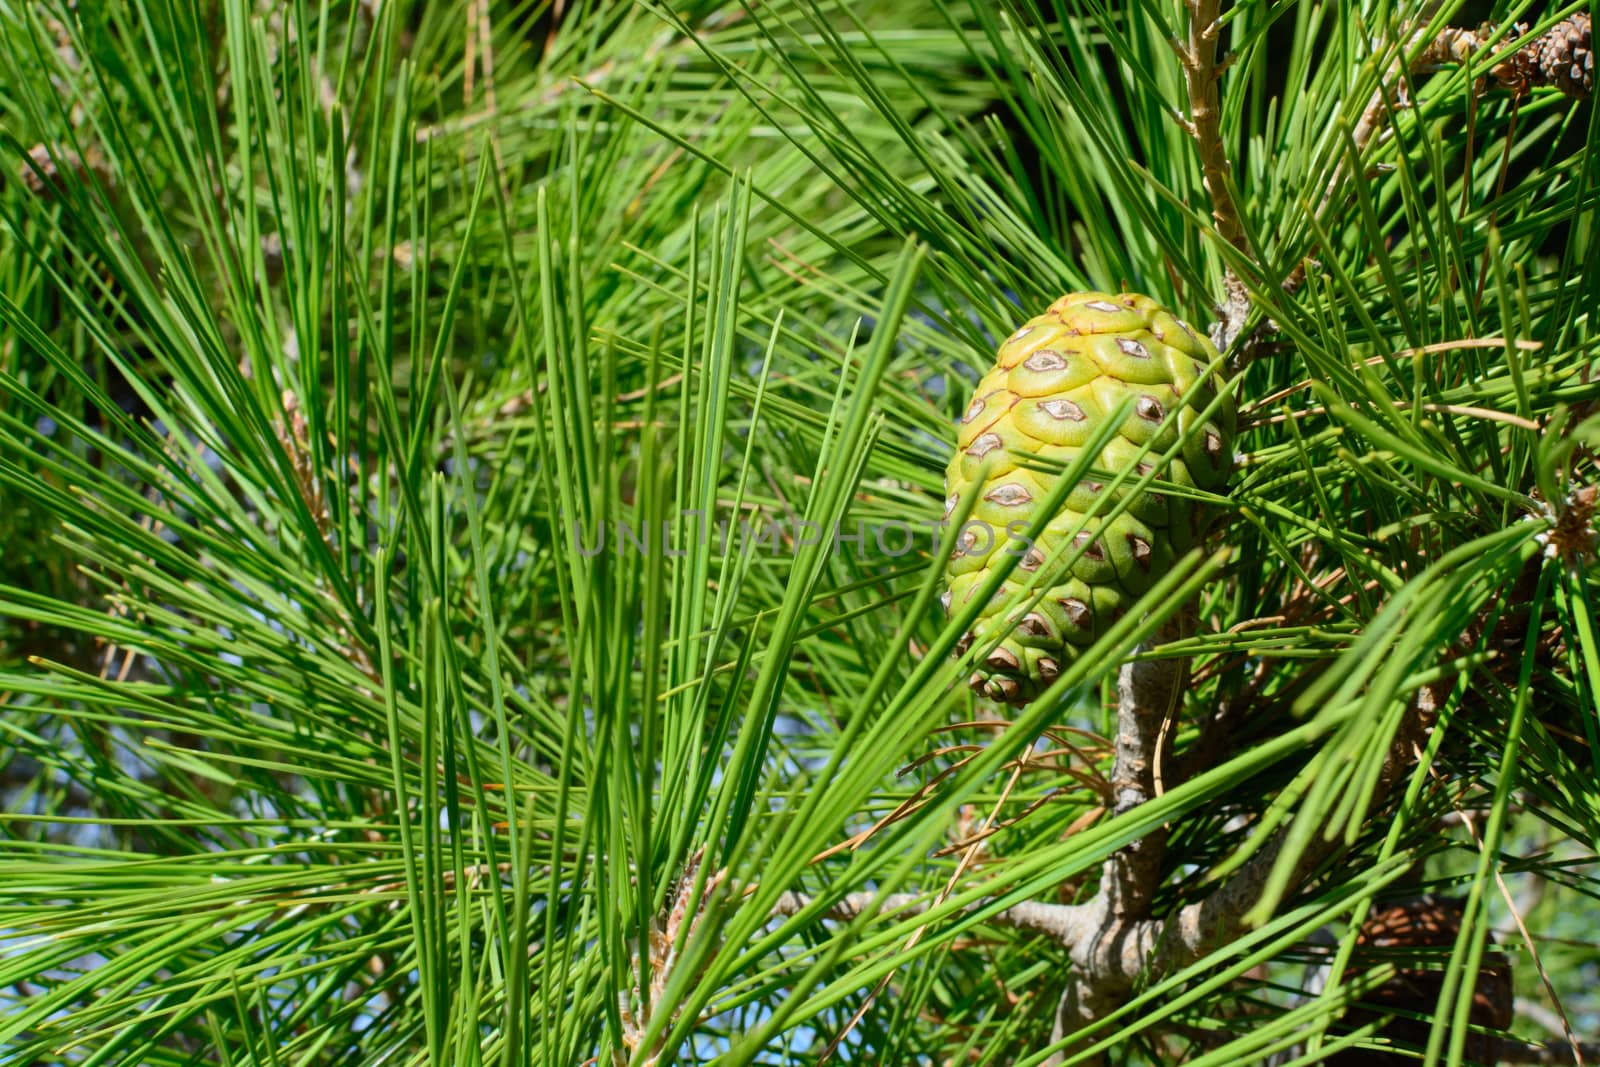 Pine cone and needles.